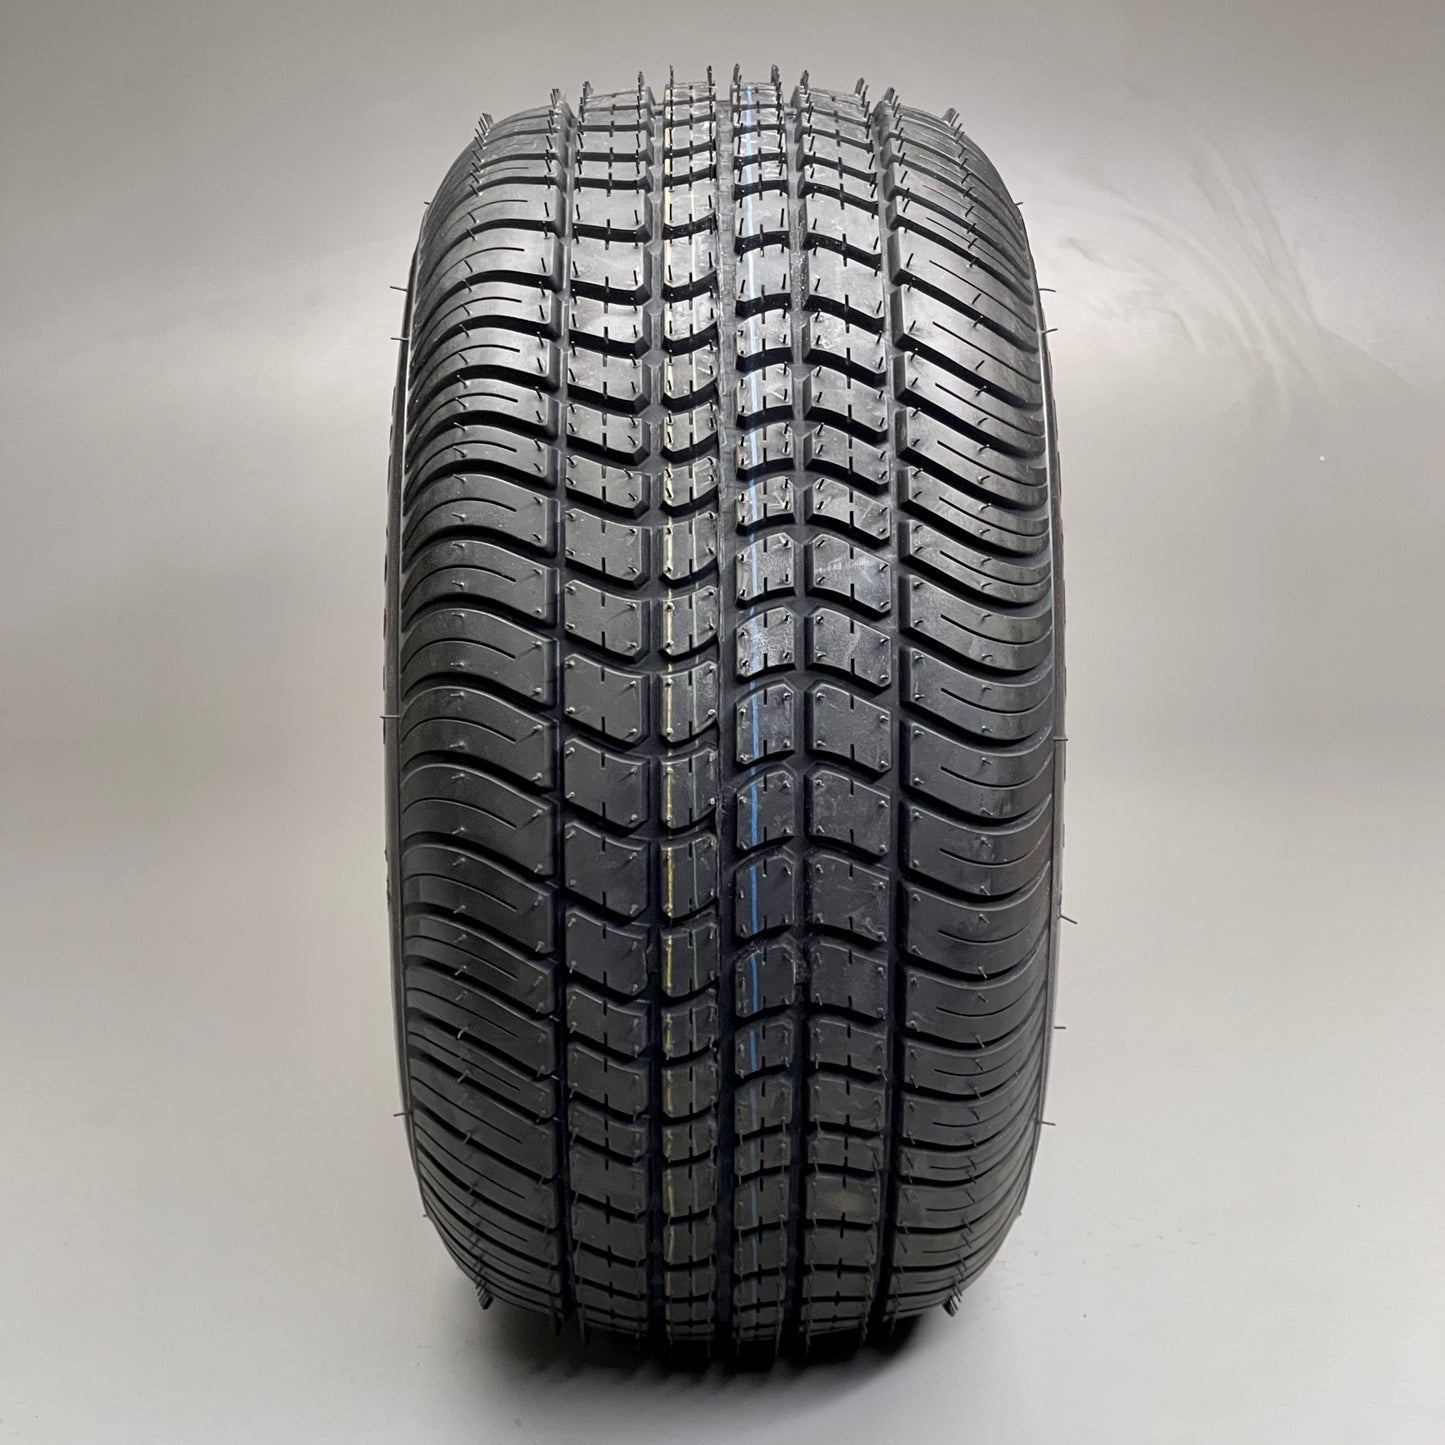 LOADSTAR 215/60-8 4-Hole White Rim Trailer Tire and Beige Wheel (New)